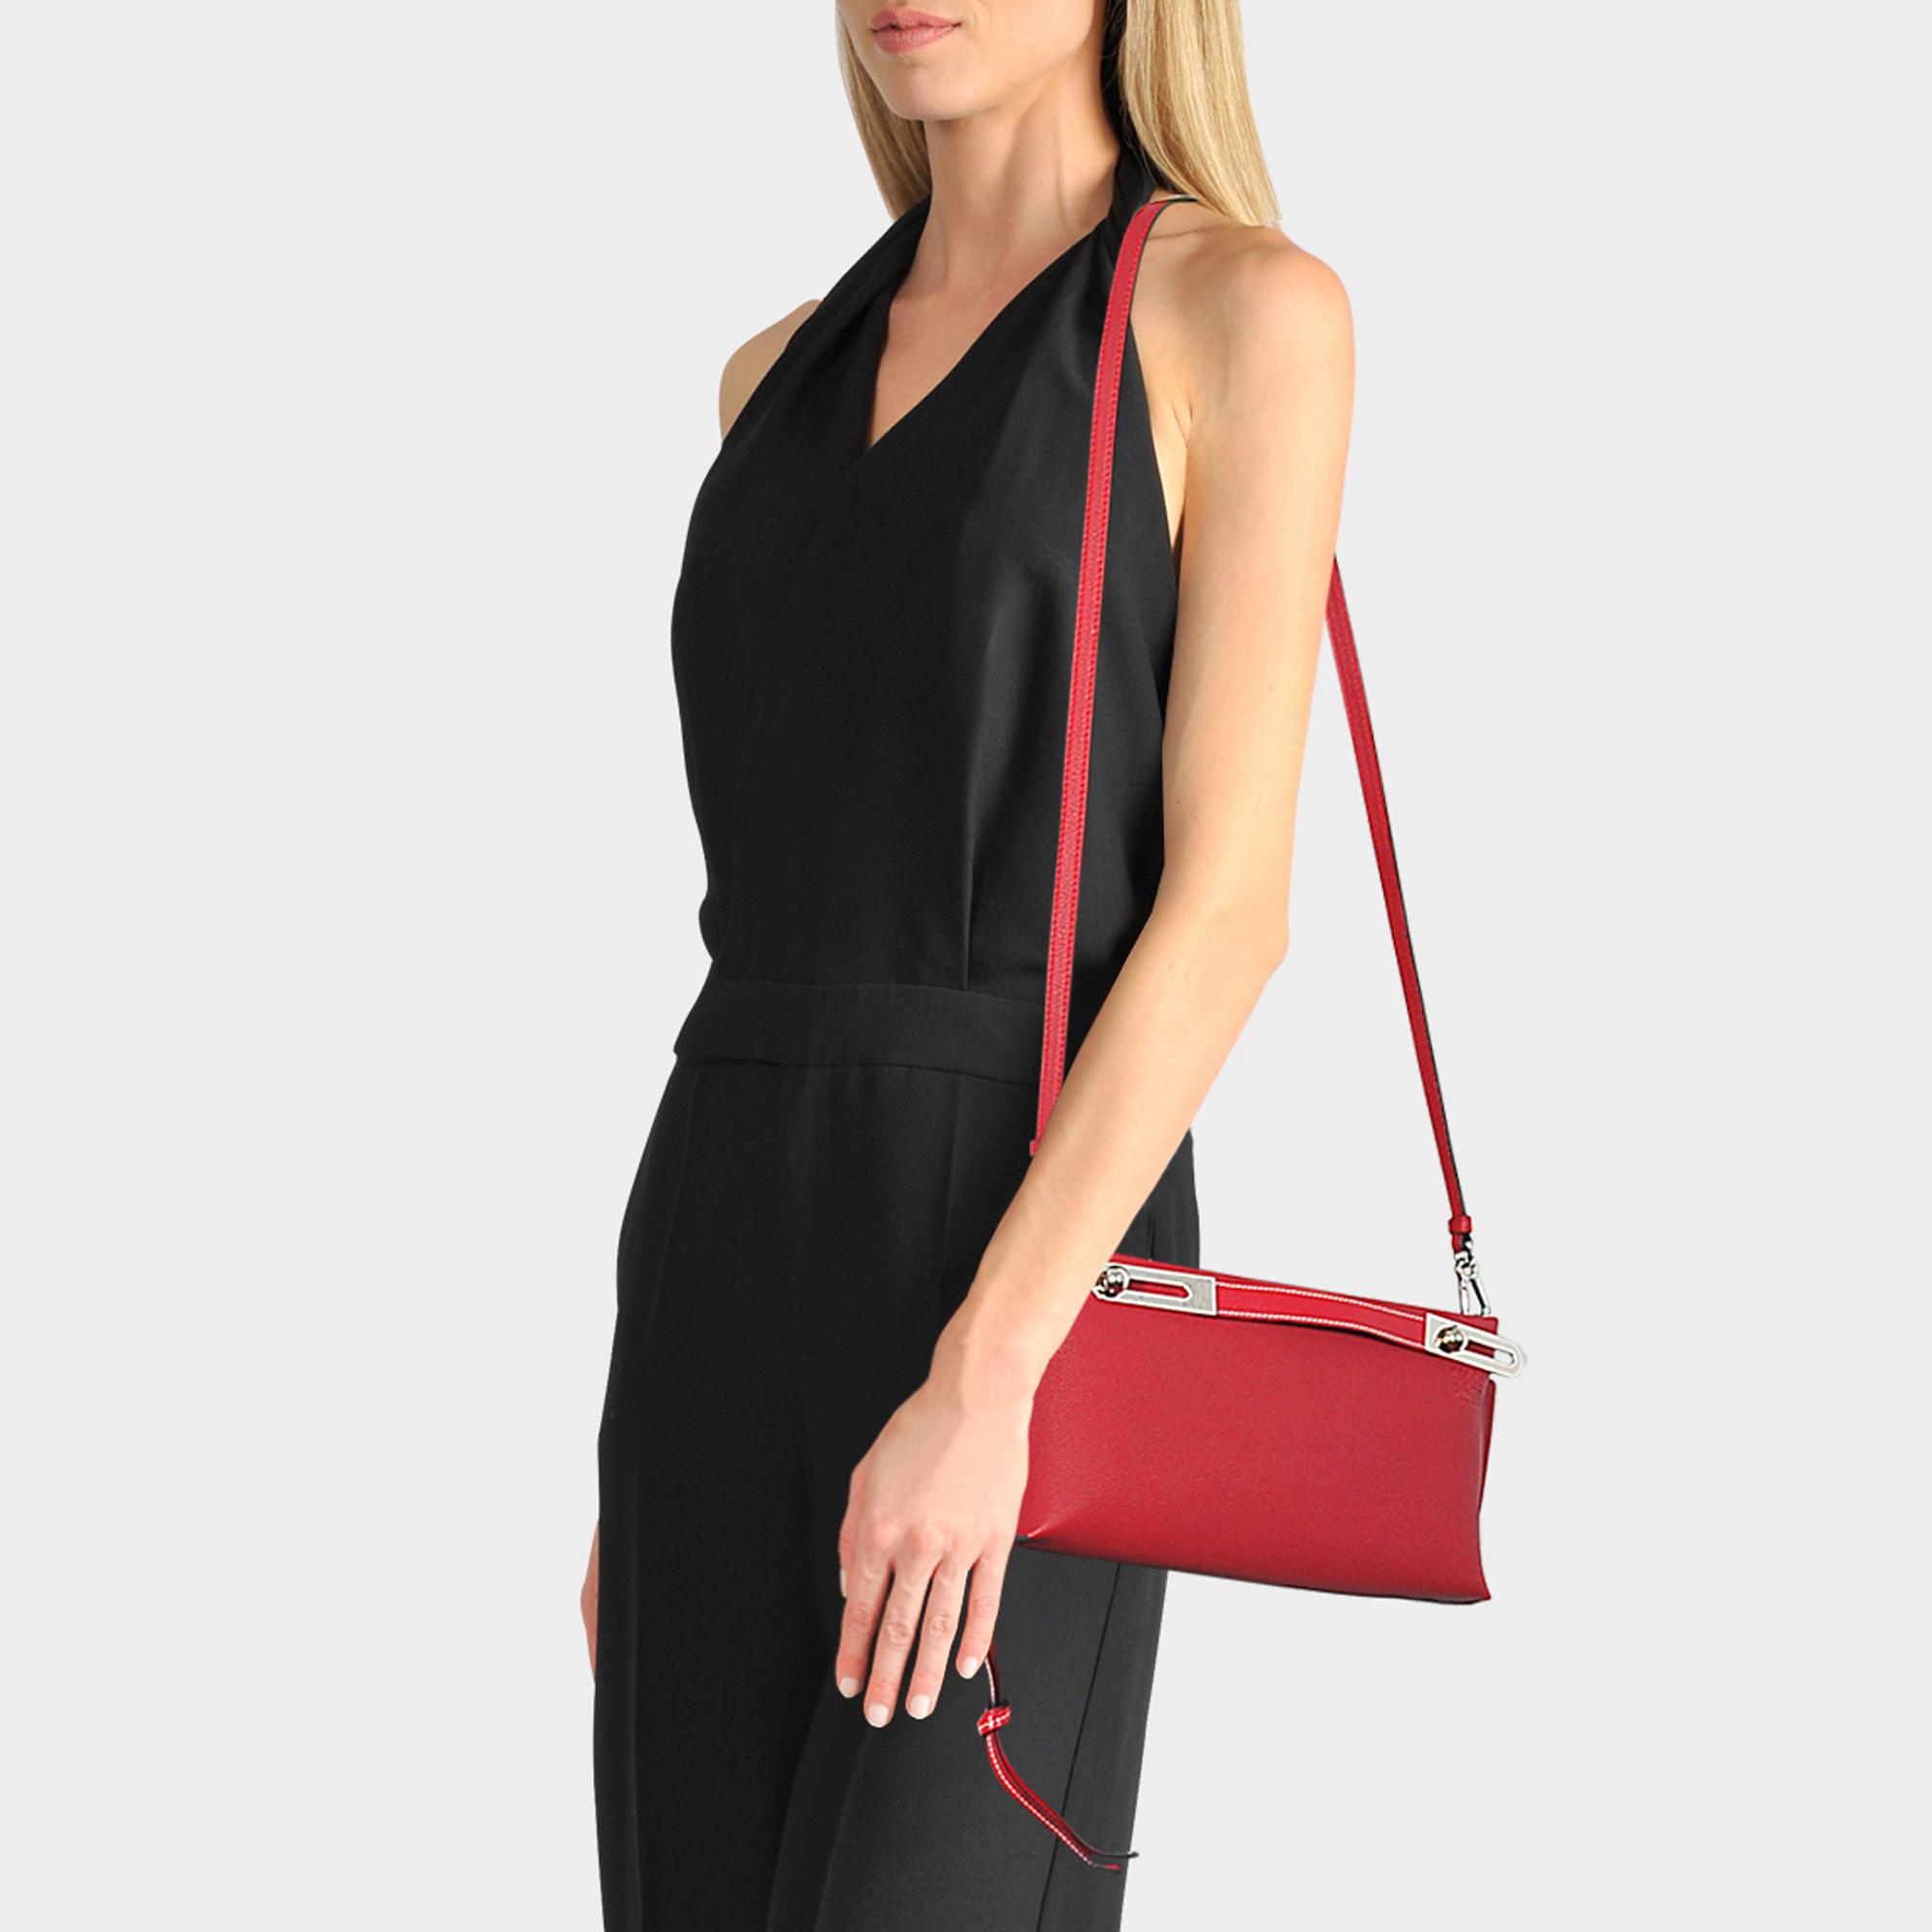 Loewe Missy Small Bag in Red - Lyst